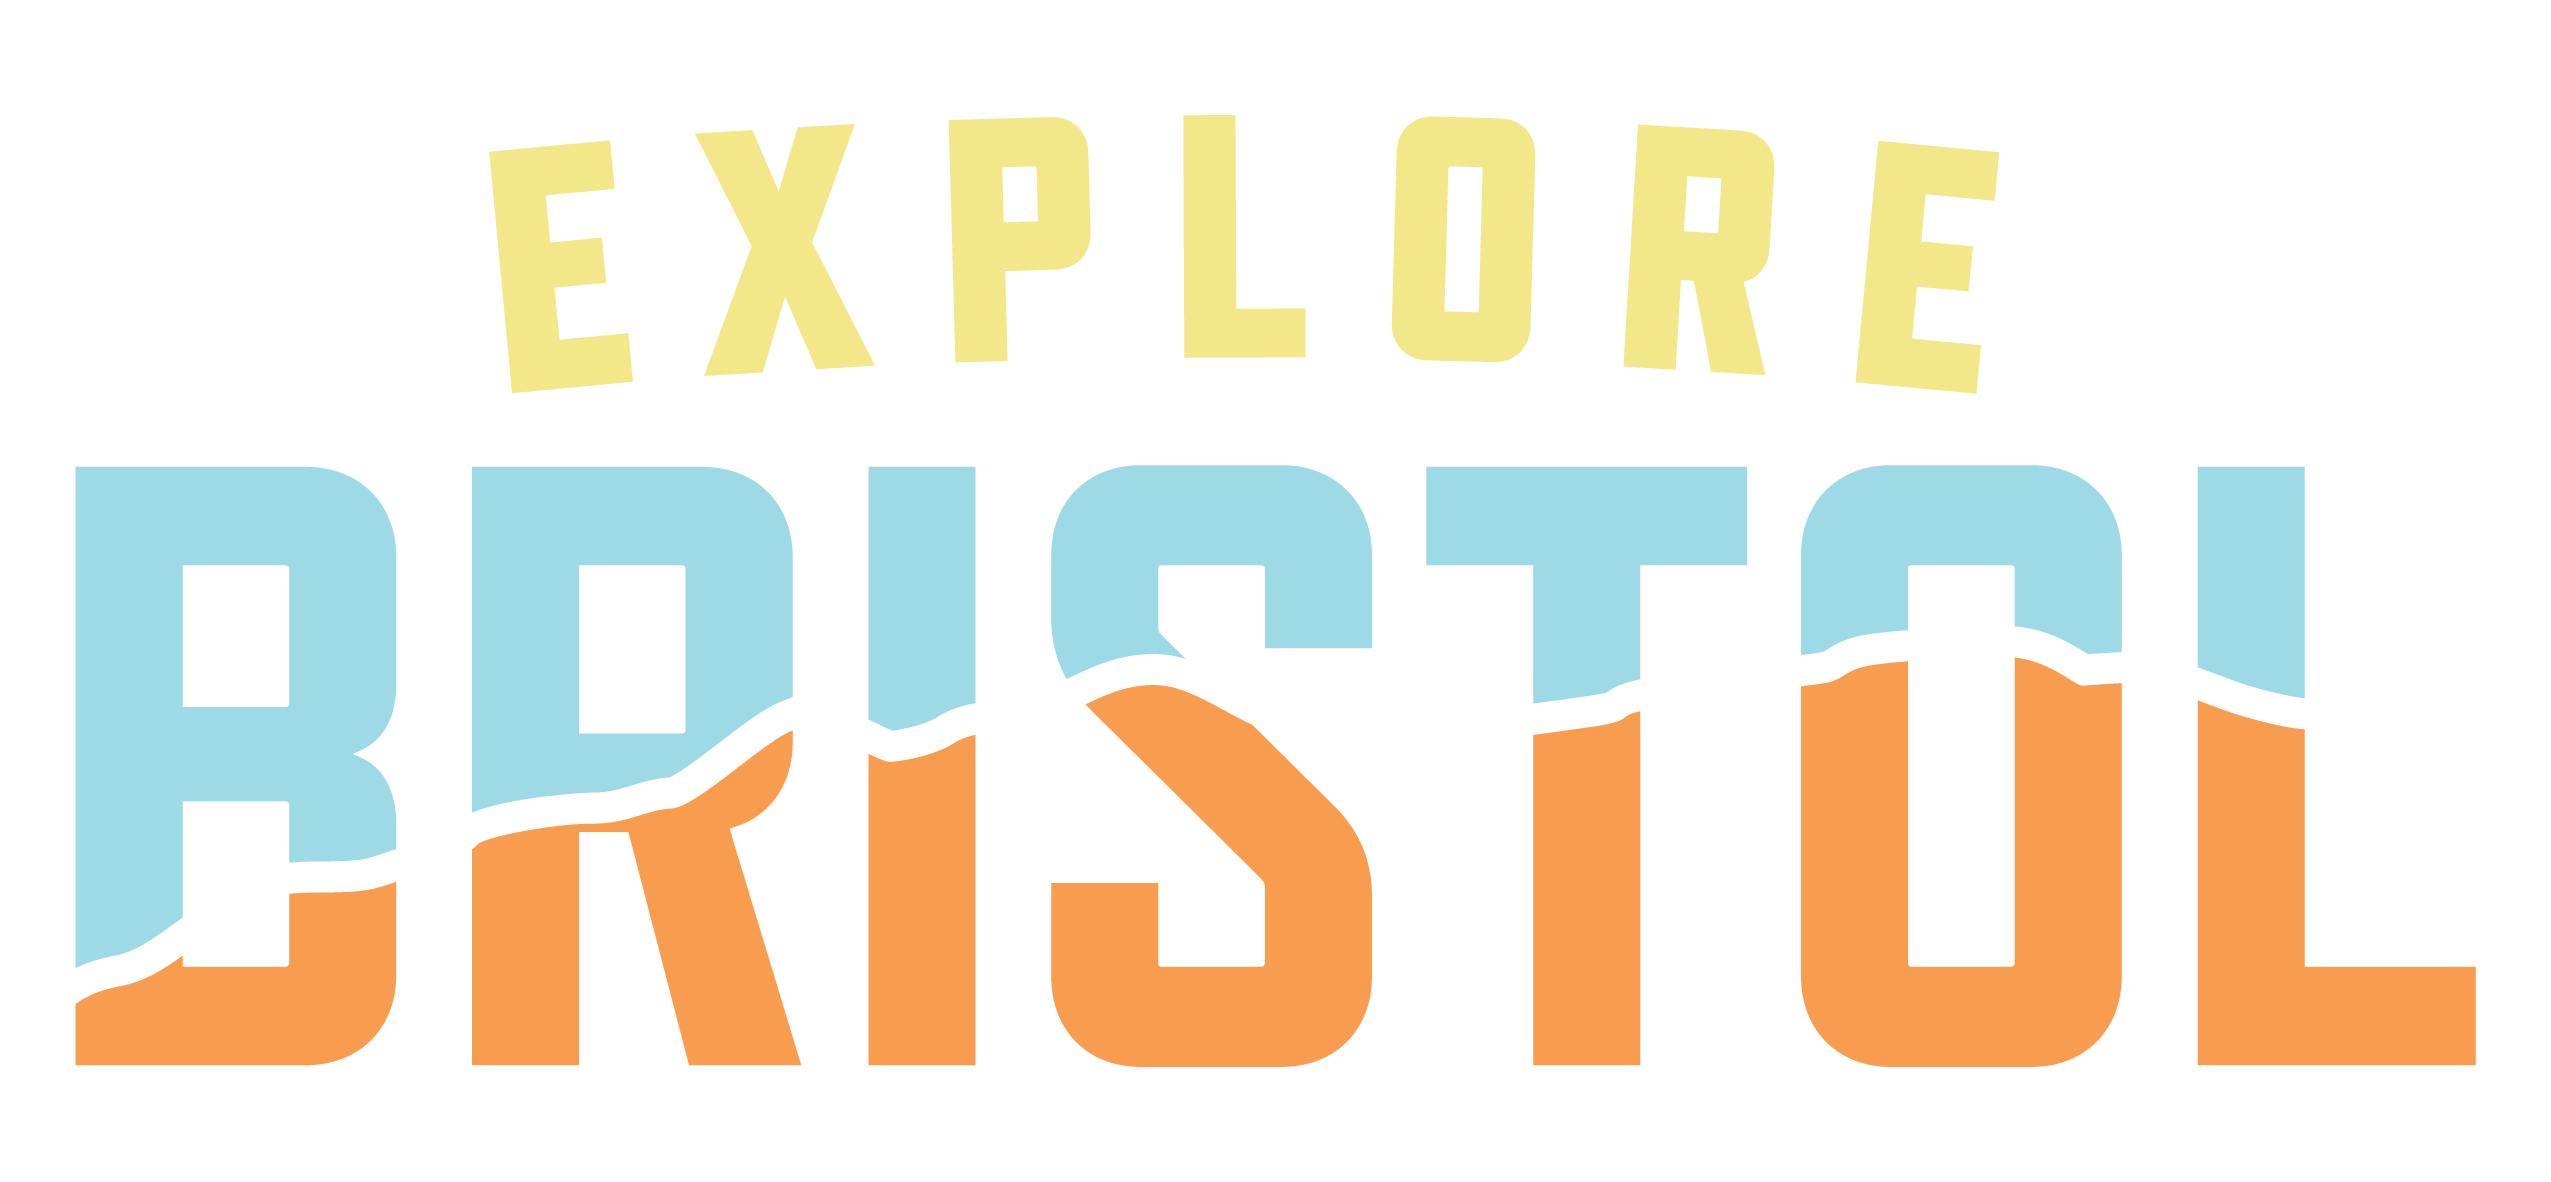 bristol tourist info centre